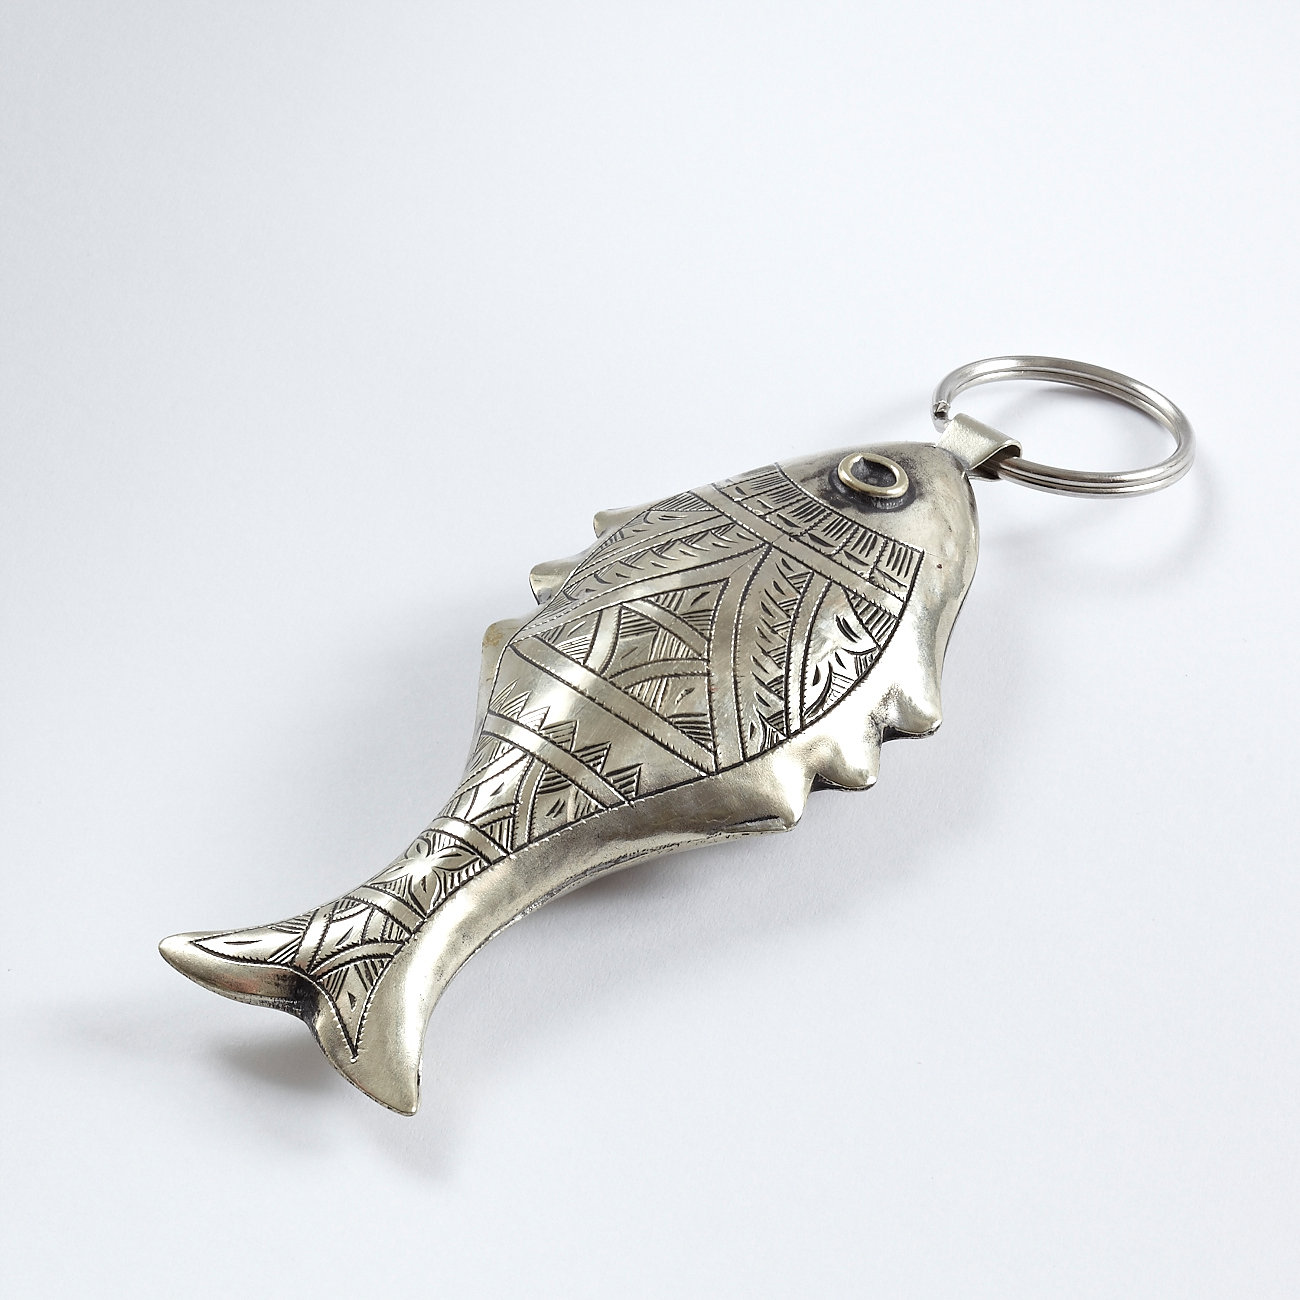 Zierfisch anders Aquarium Schlüsselanhänger Anhänger Silber aus Metall 